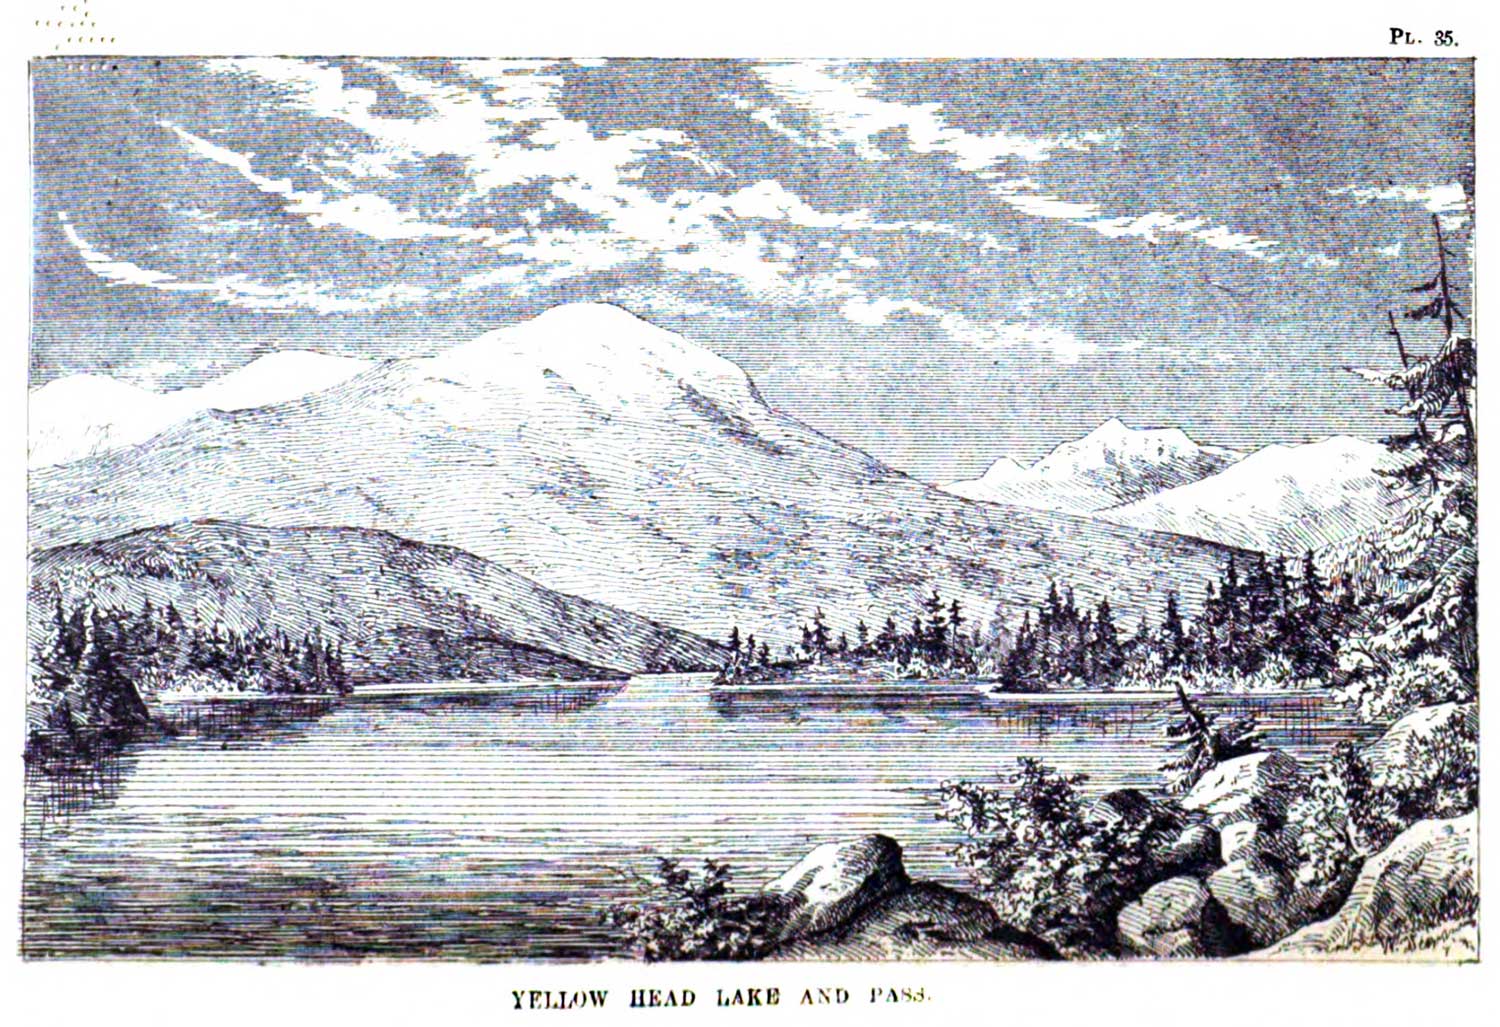 Yellow Head Lake and Pass. George Monro Grant, plate 35